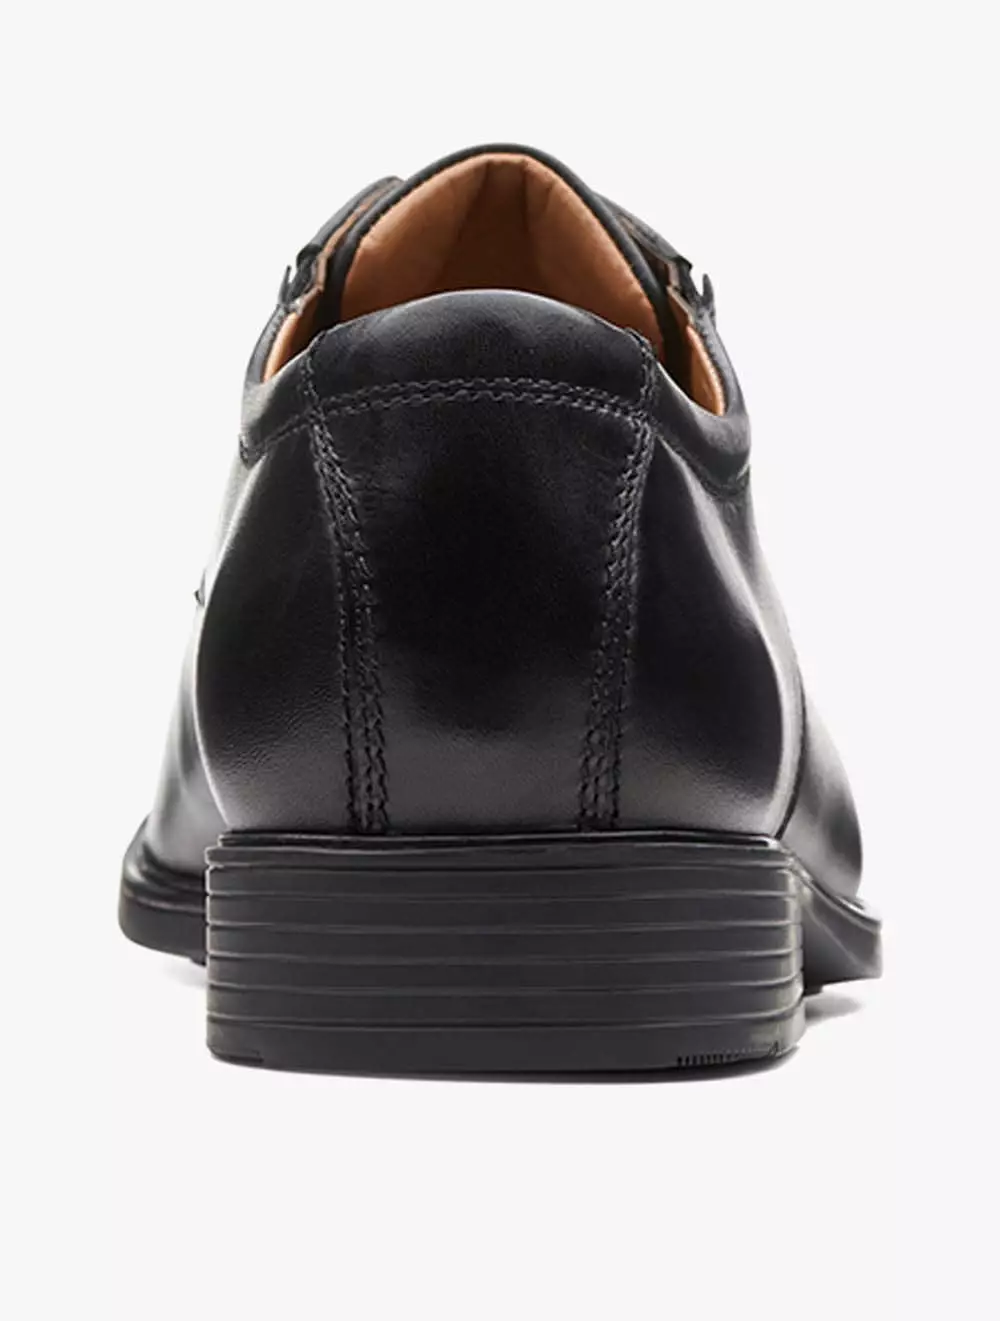 Jual Clarks Clarks Tilden Plain Men's Shoes- Black Leather Original ...